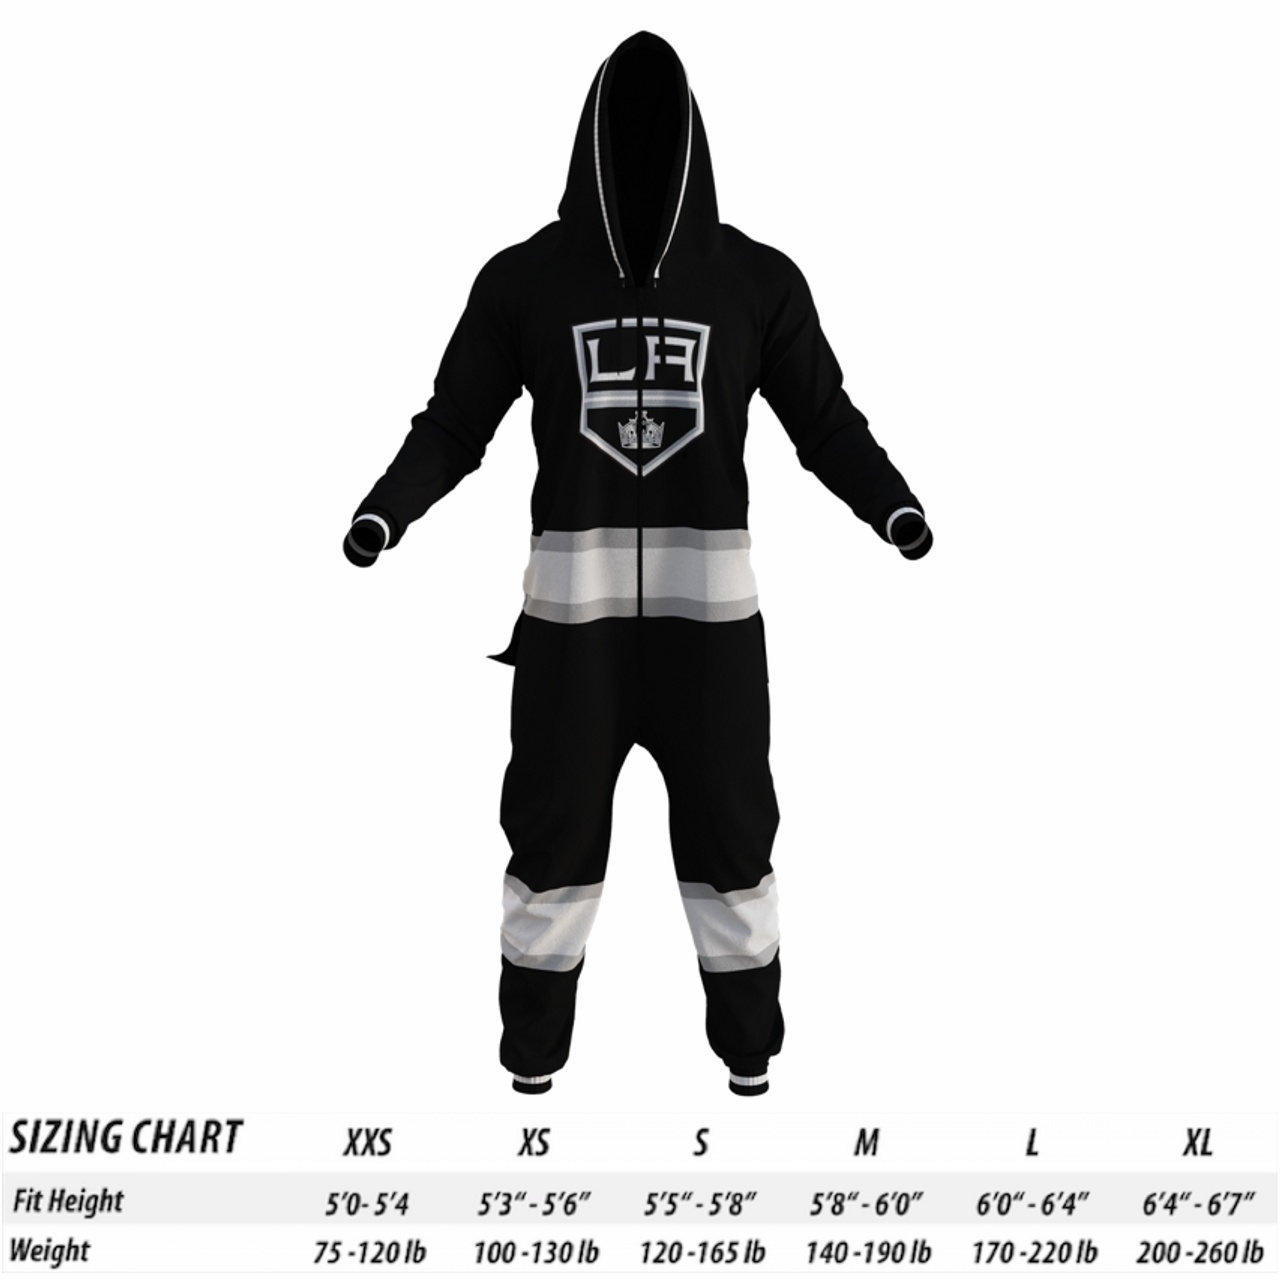 Edmonton Oilers vs LA Kings Match 2023 NHL playoffs shirt, hoodie